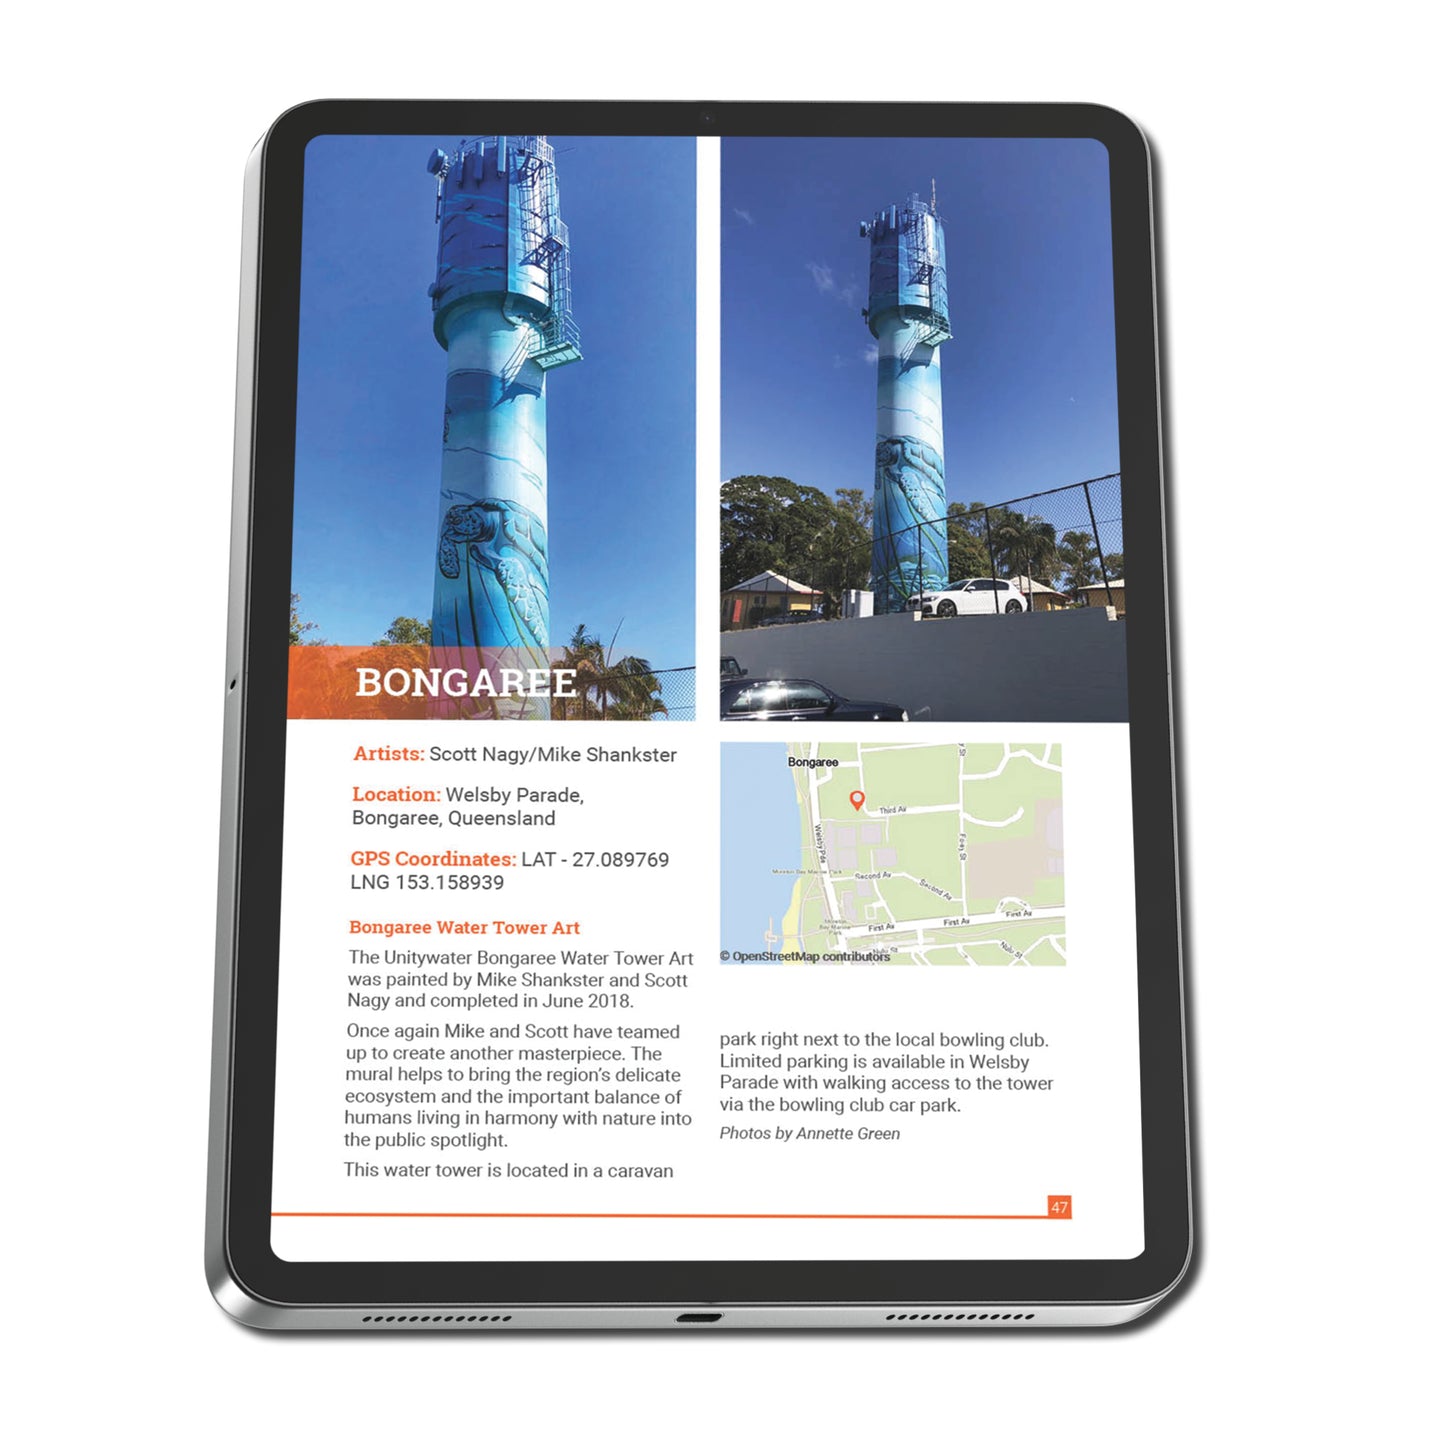 Queensland Regional Silo & Water Tower Art Guide (Download)